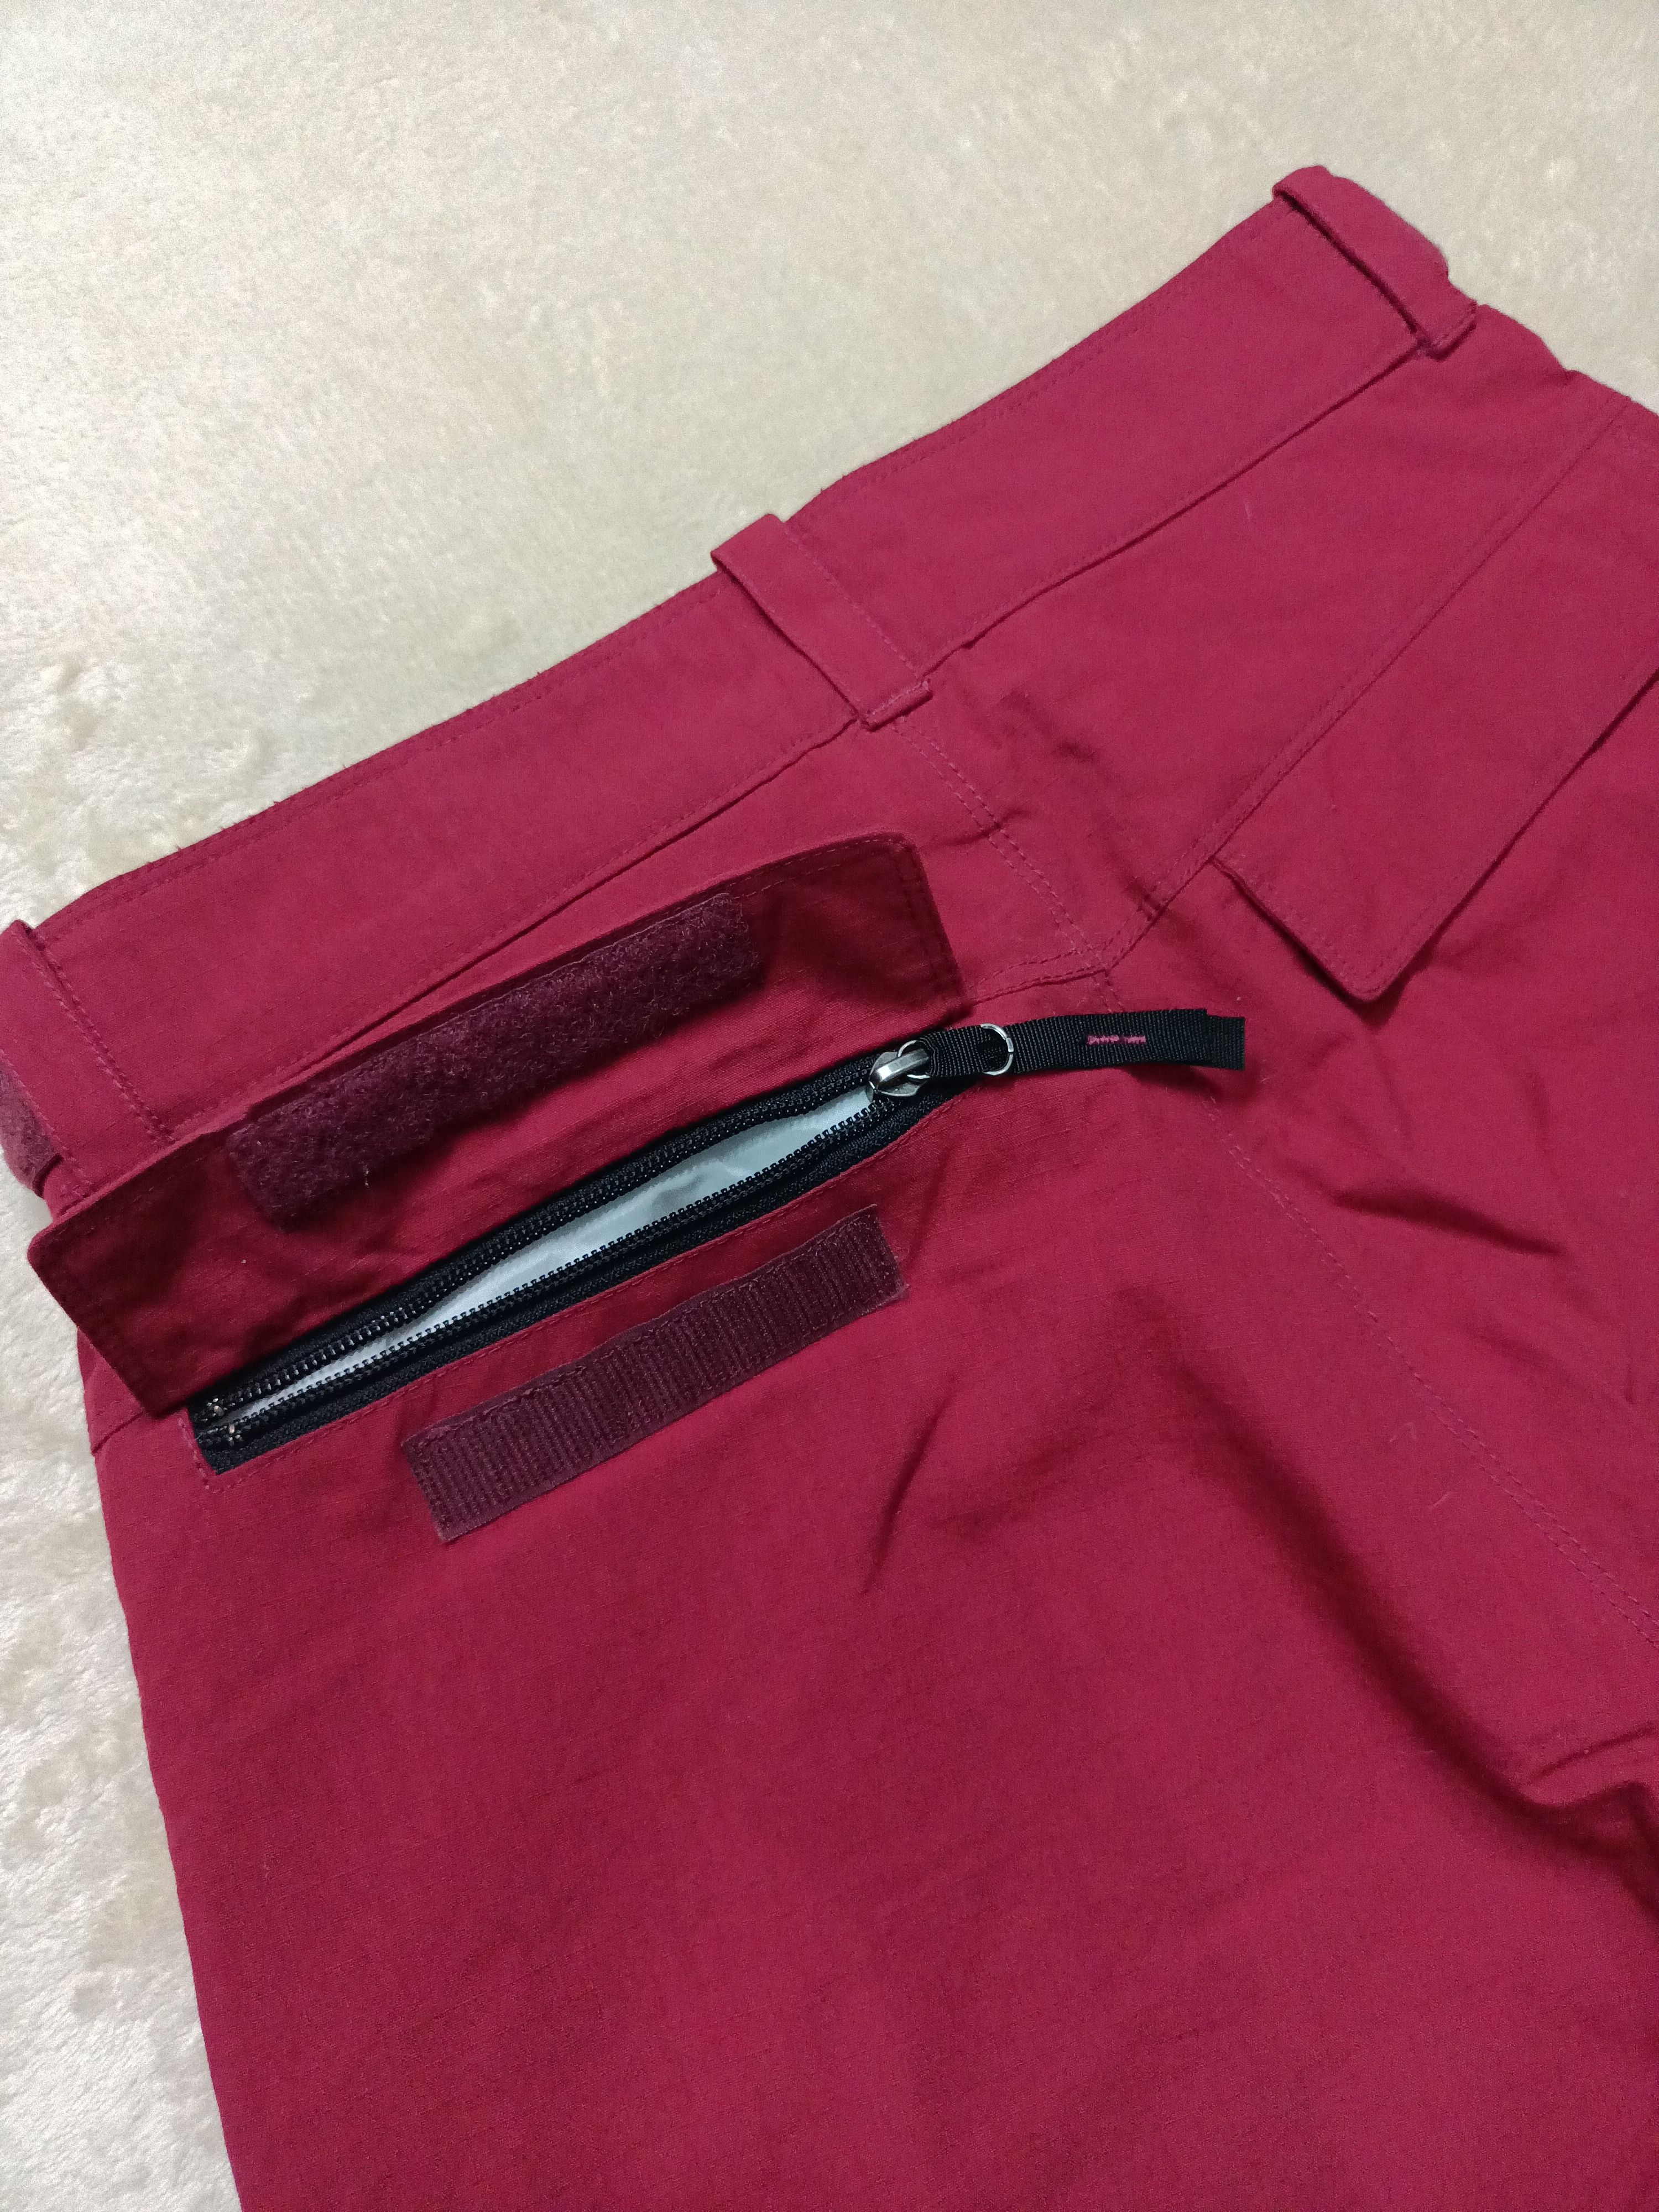 Archival Clothing - Salomon 3M Snow Blade Jaspo High Quality Insulated Pants - 9